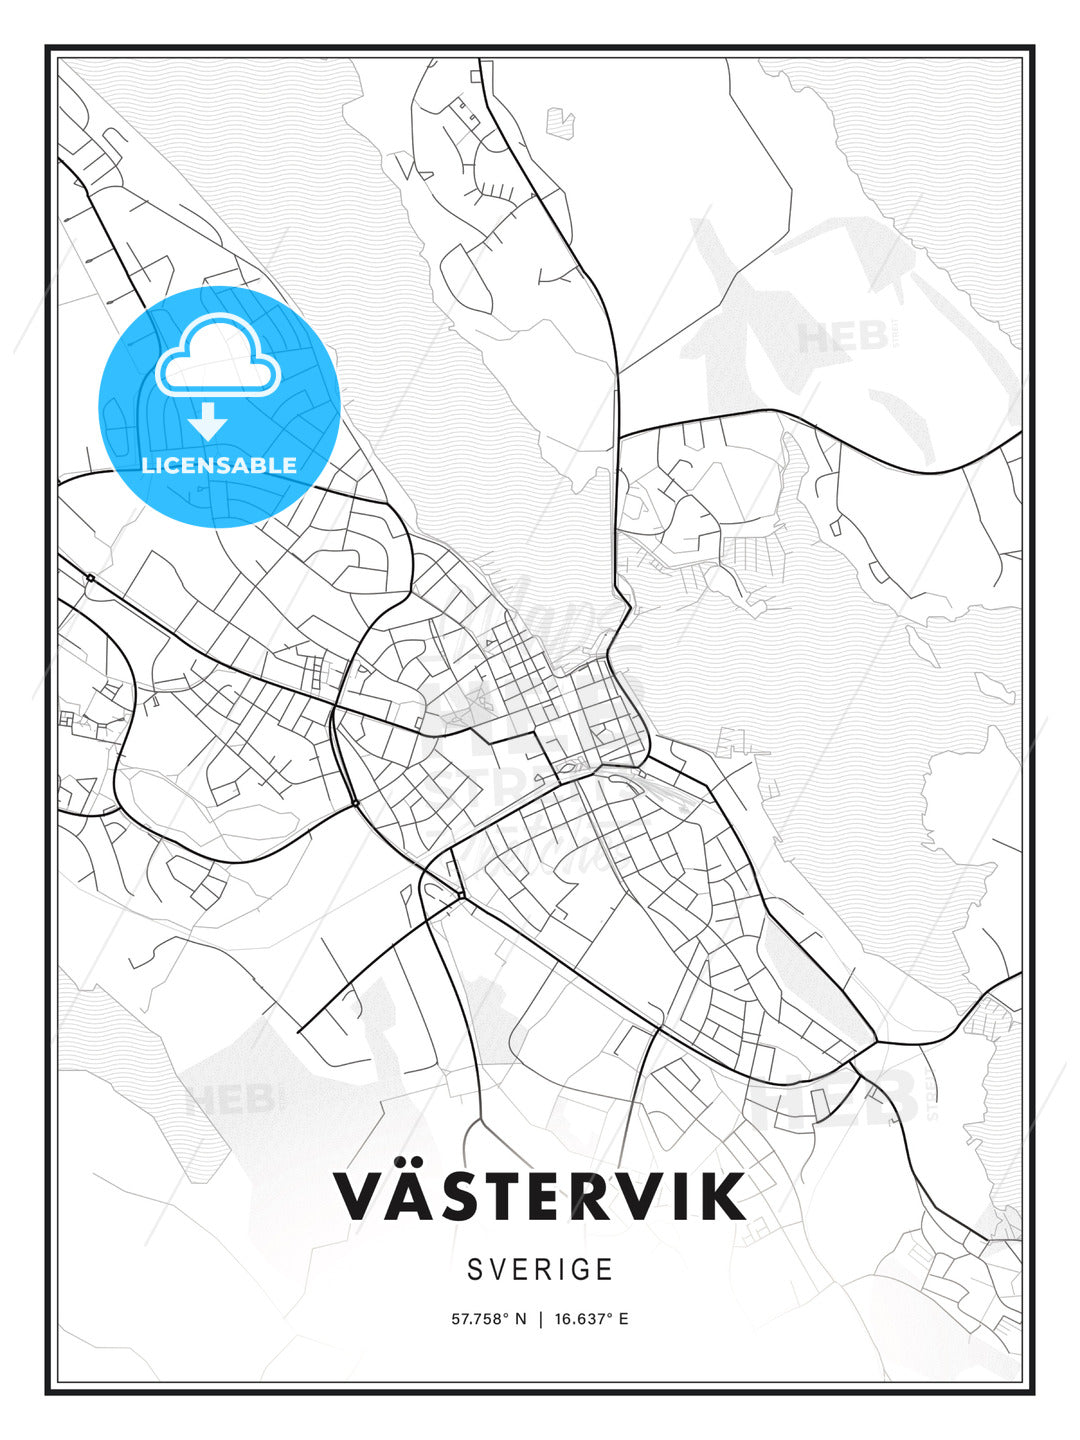 Västervik, Sweden, Modern Print Template in Various Formats - HEBSTREITS Sketches